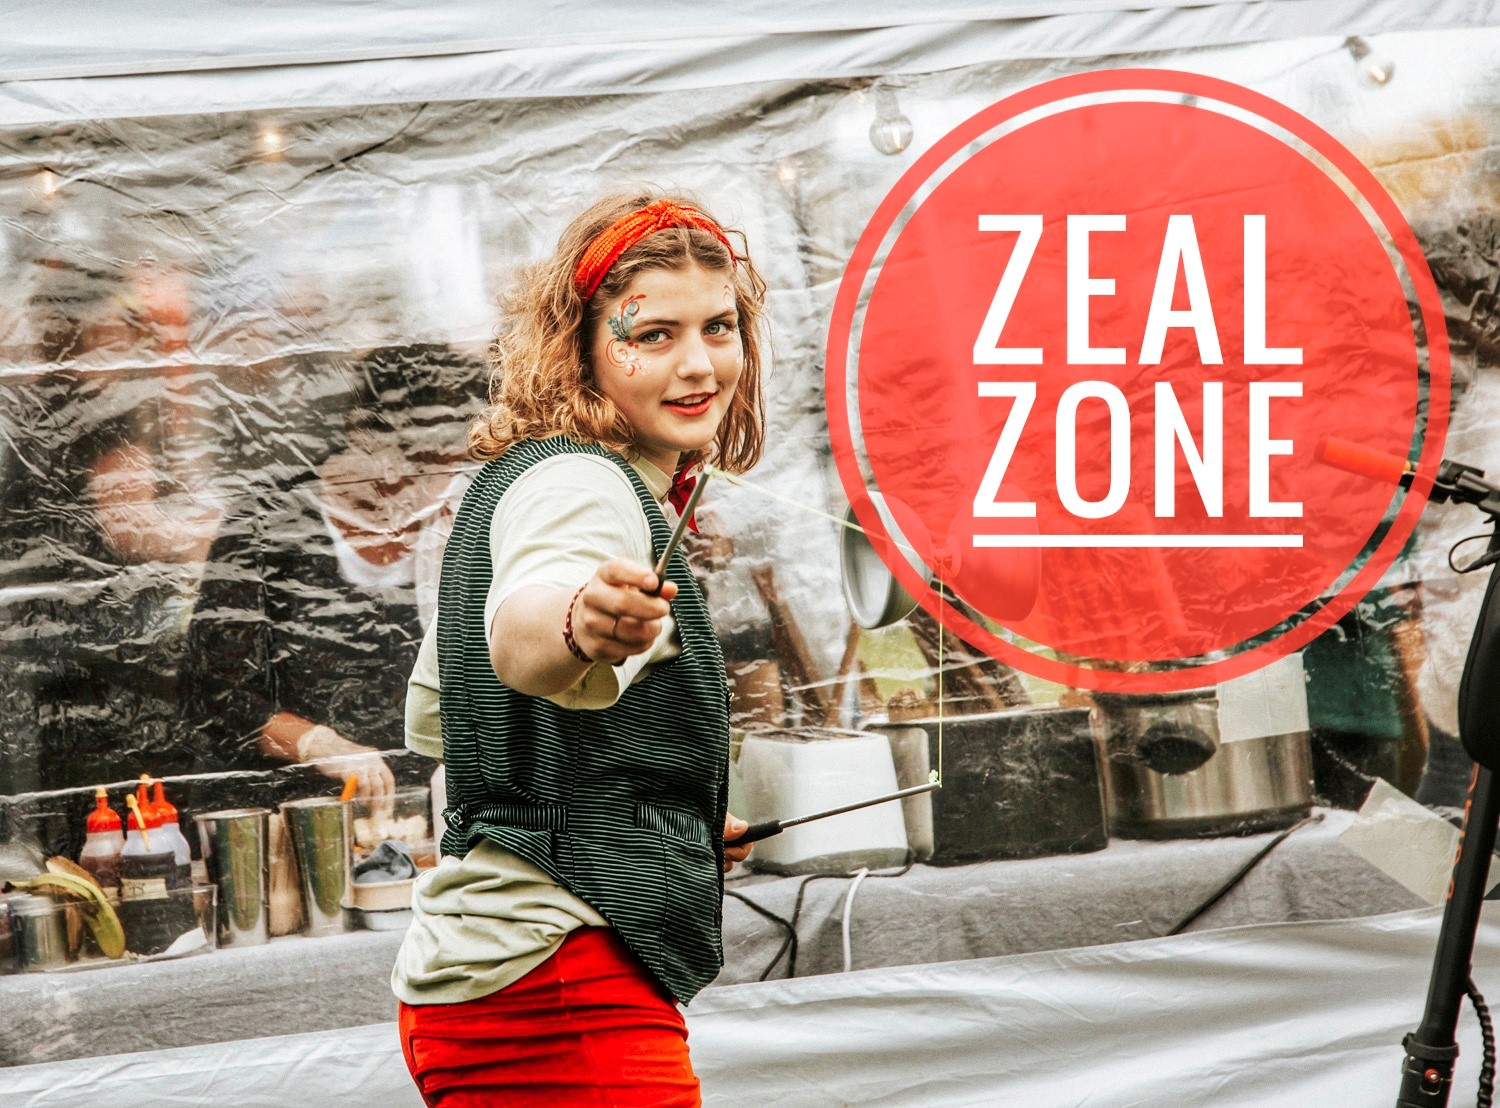 Zeal Zone